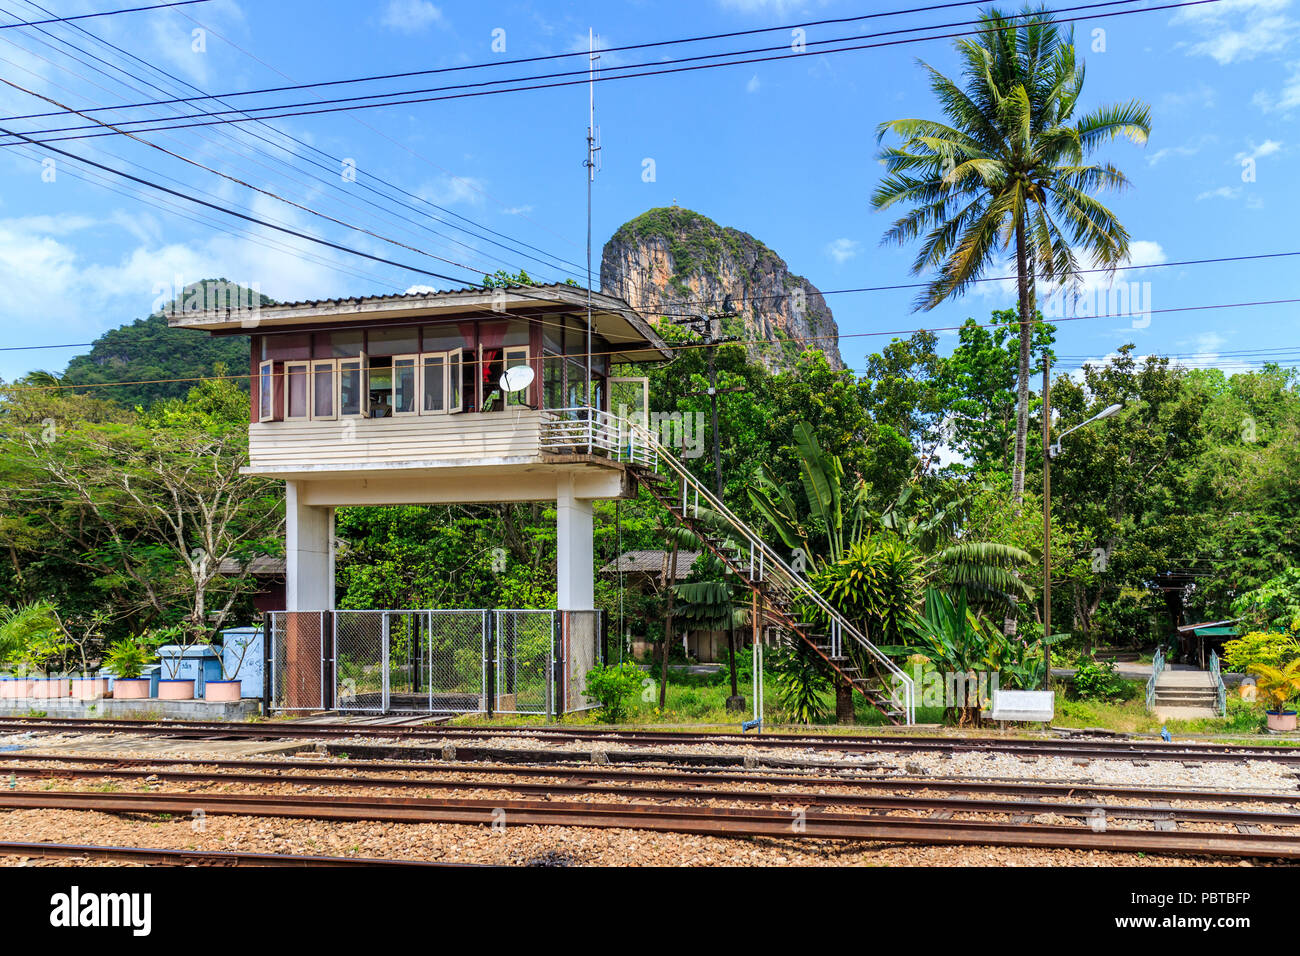 Railway signal box, Phattalung, Thailand Stock Photo